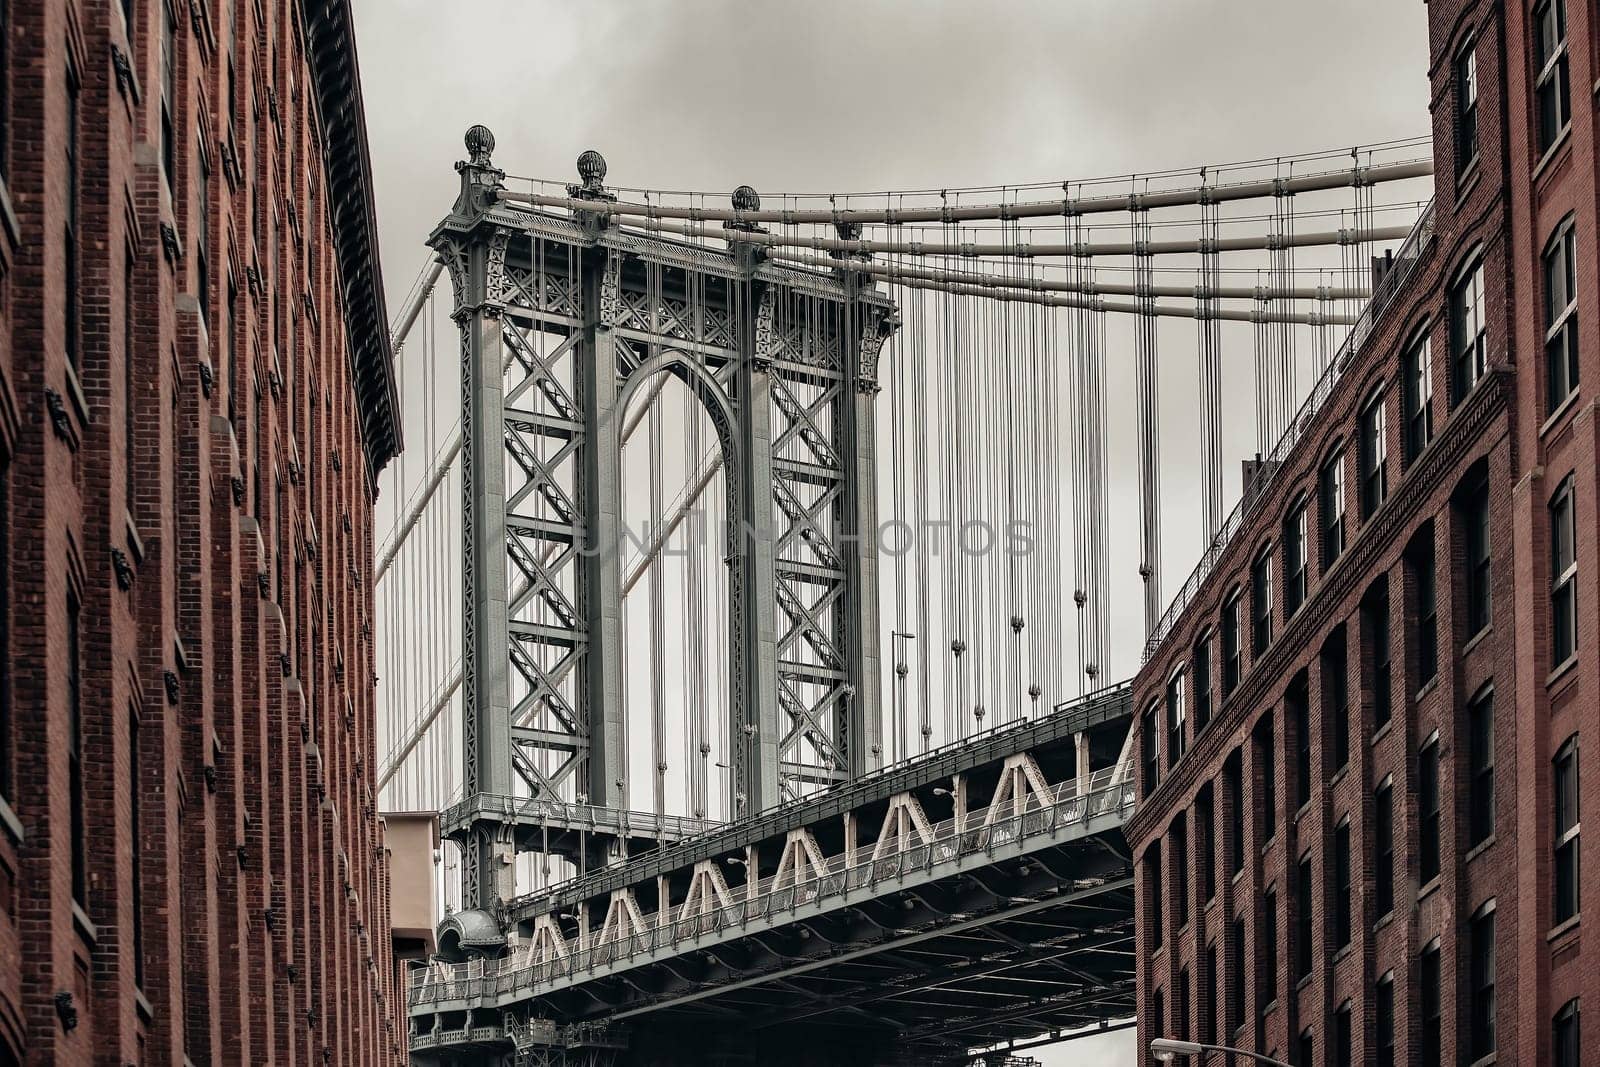  Manhattan Bridge in New York City in USA by f11photo